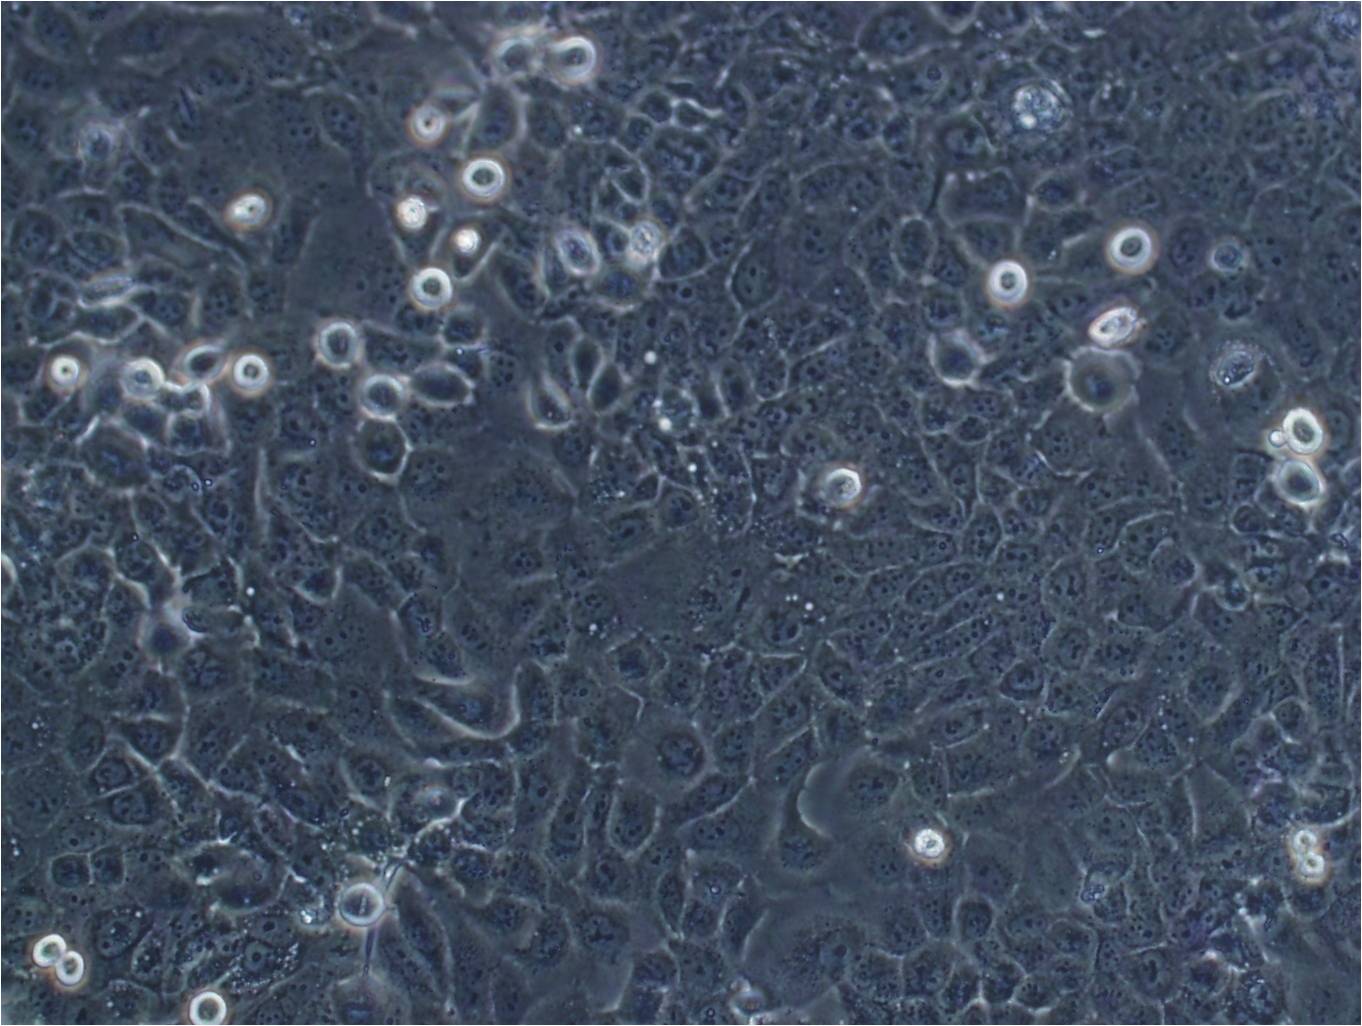 PNEC30 epithelioid cells小鼠前列腺癌细胞系